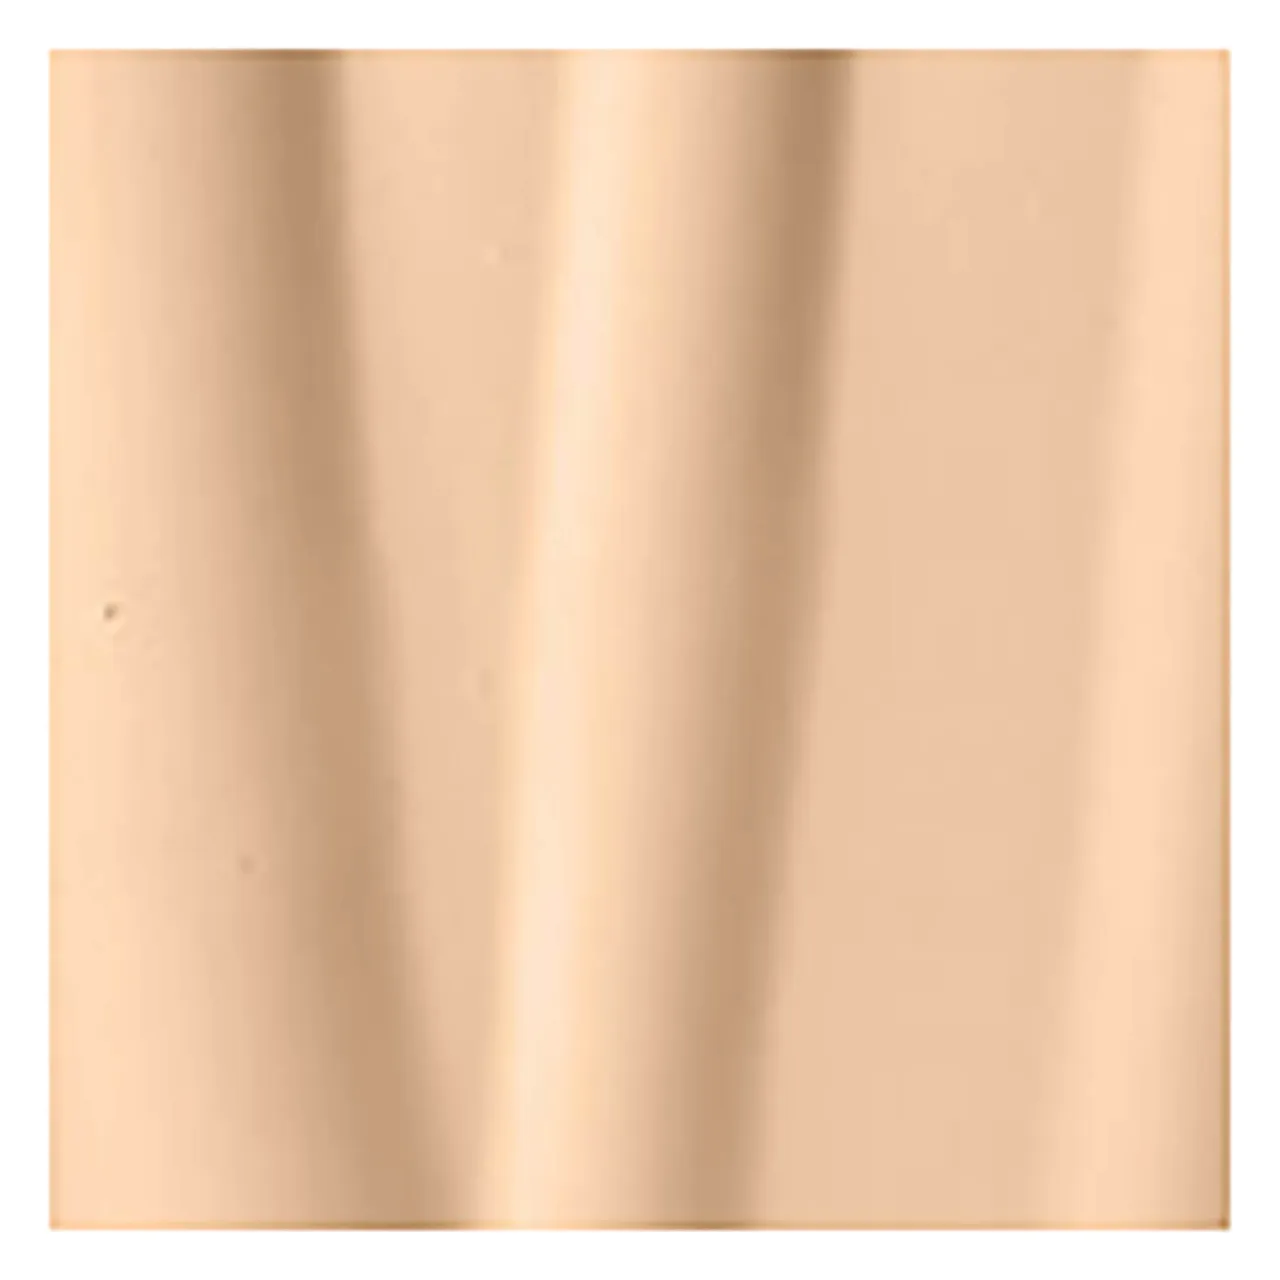 MAC Pro Longwear Concealer (verschiedene Farbtöne) - NC20